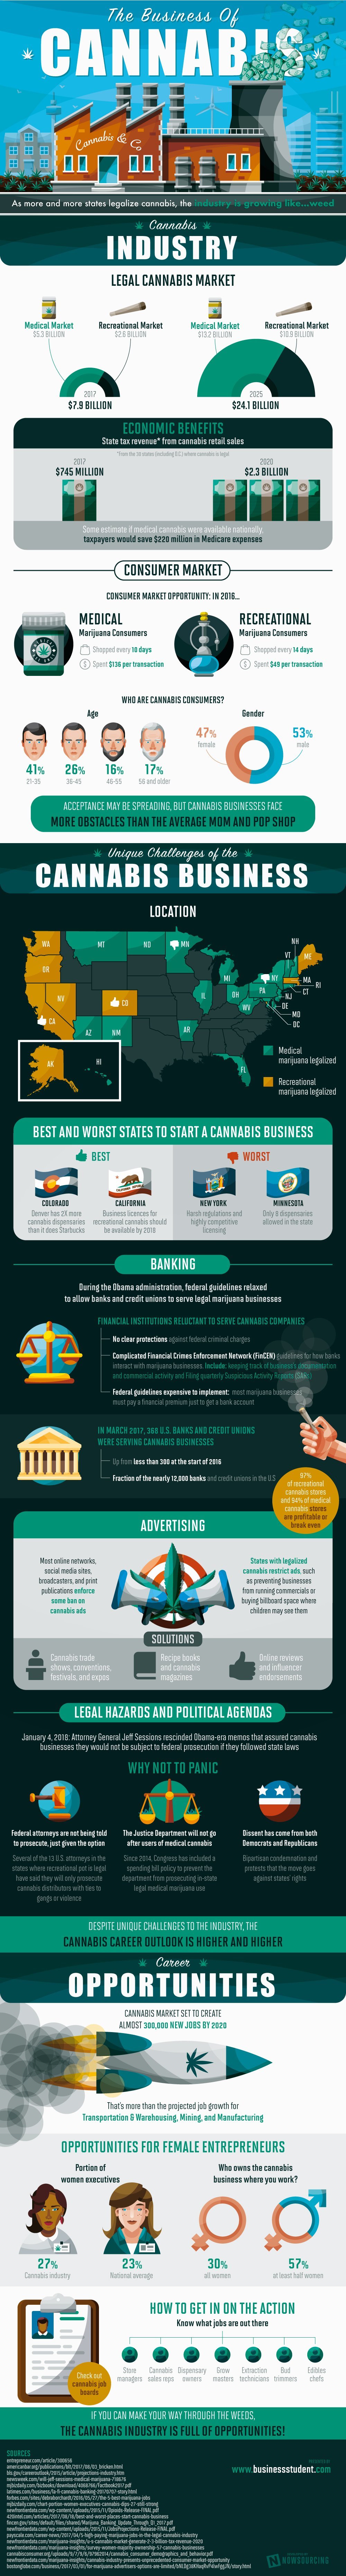 De cannabis industrie